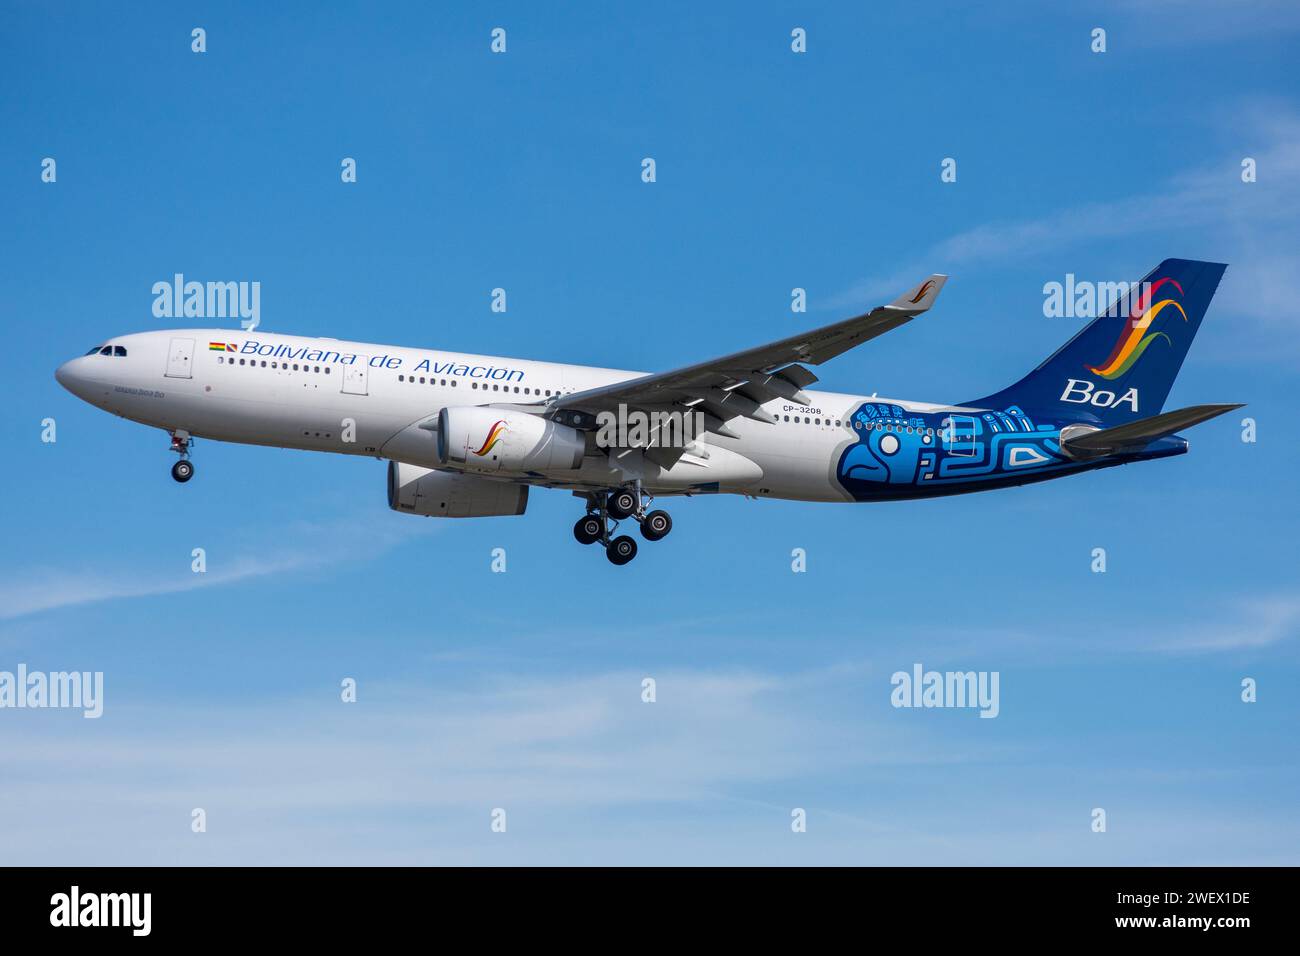 Airbus A330 aereo di linea della compagnia aerea Boliviana de Aviación atterraggio Foto Stock